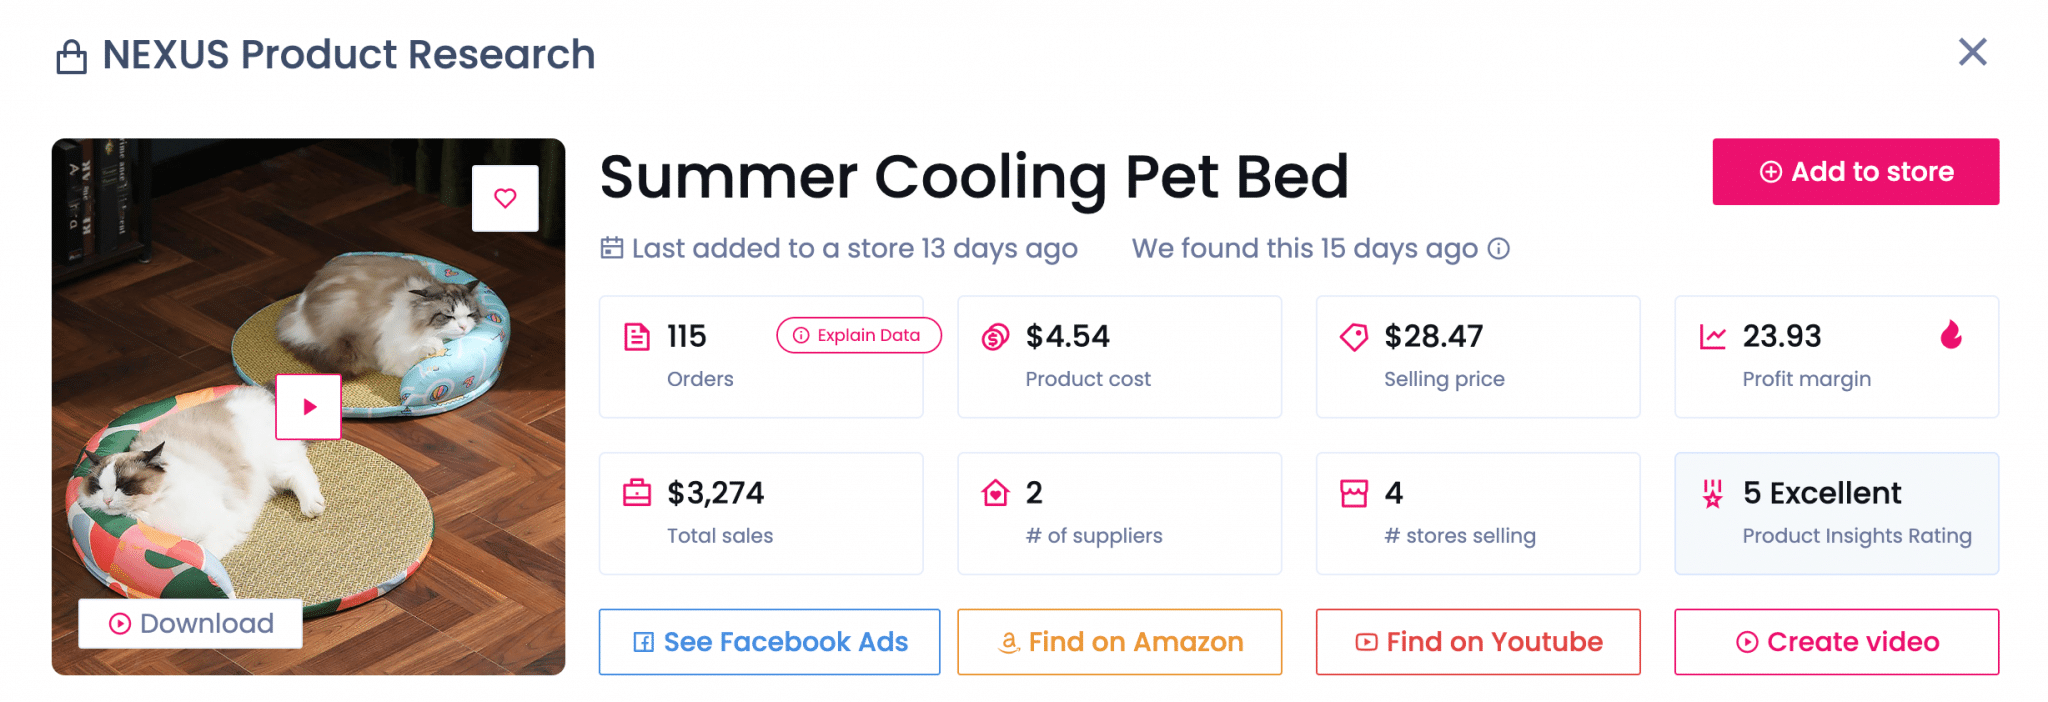 Summer Cooling Pet Bed Dashboard